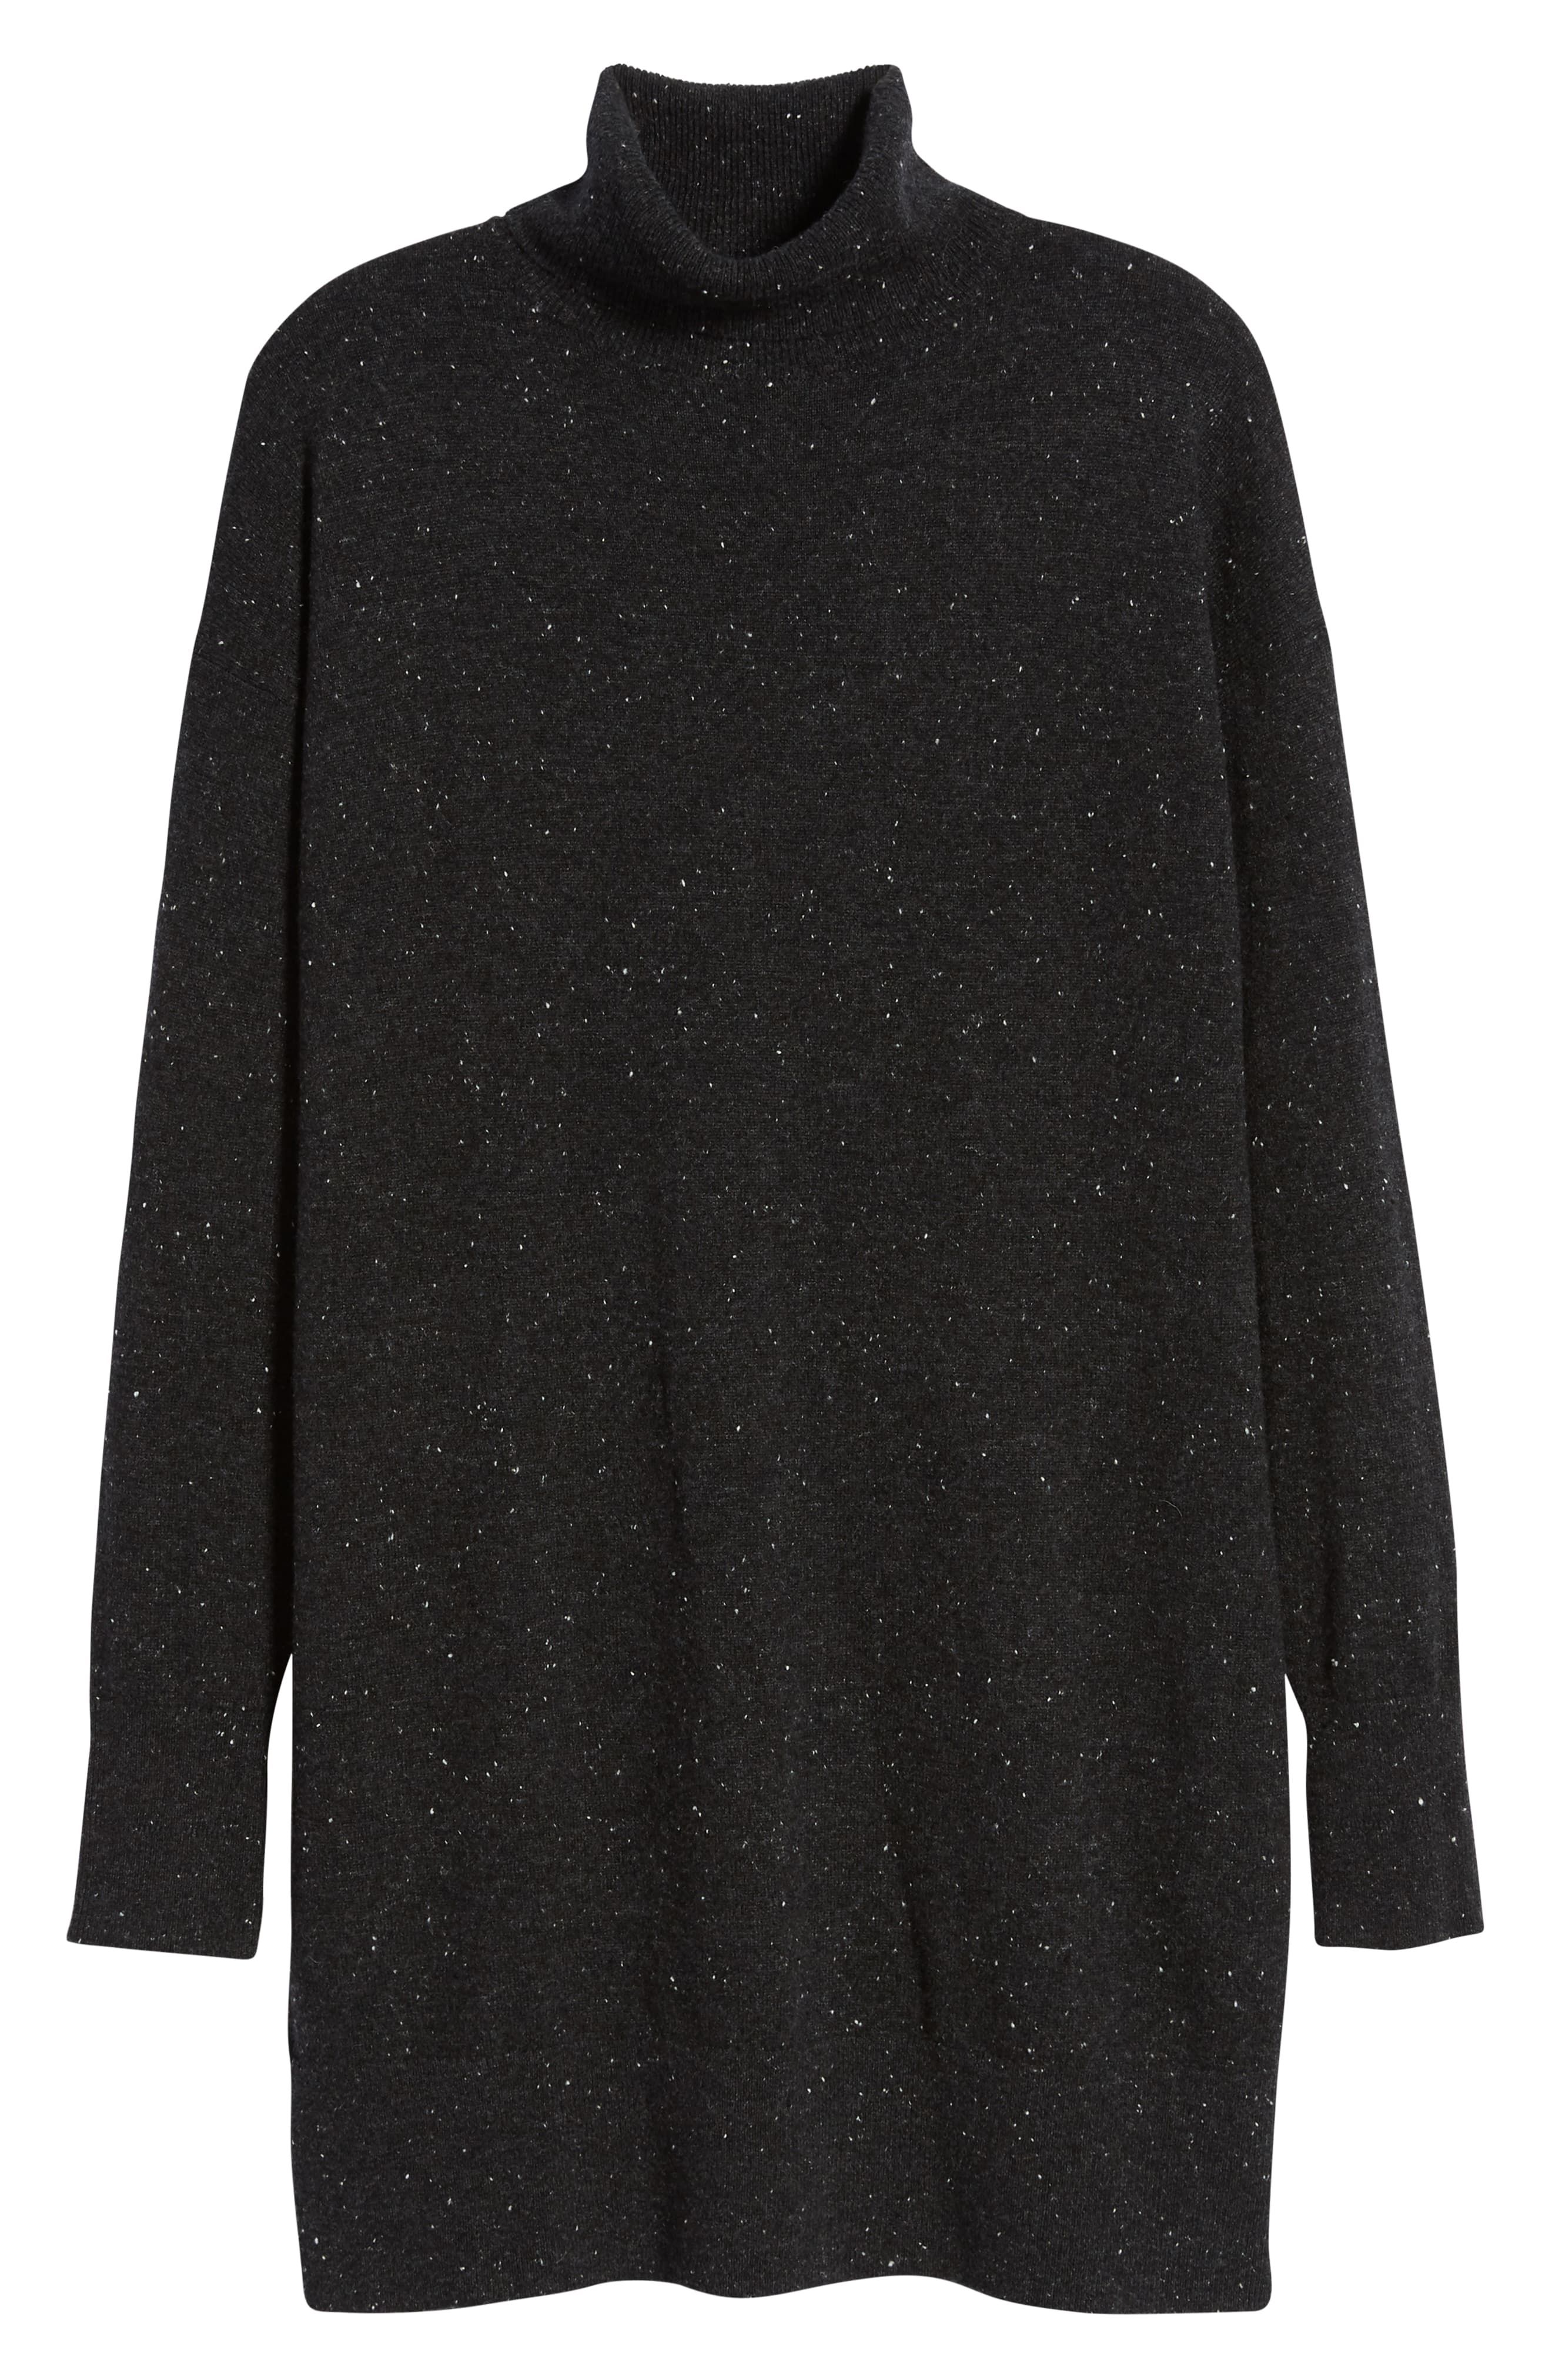 The Cashmere Turtleneck Sweater Dress